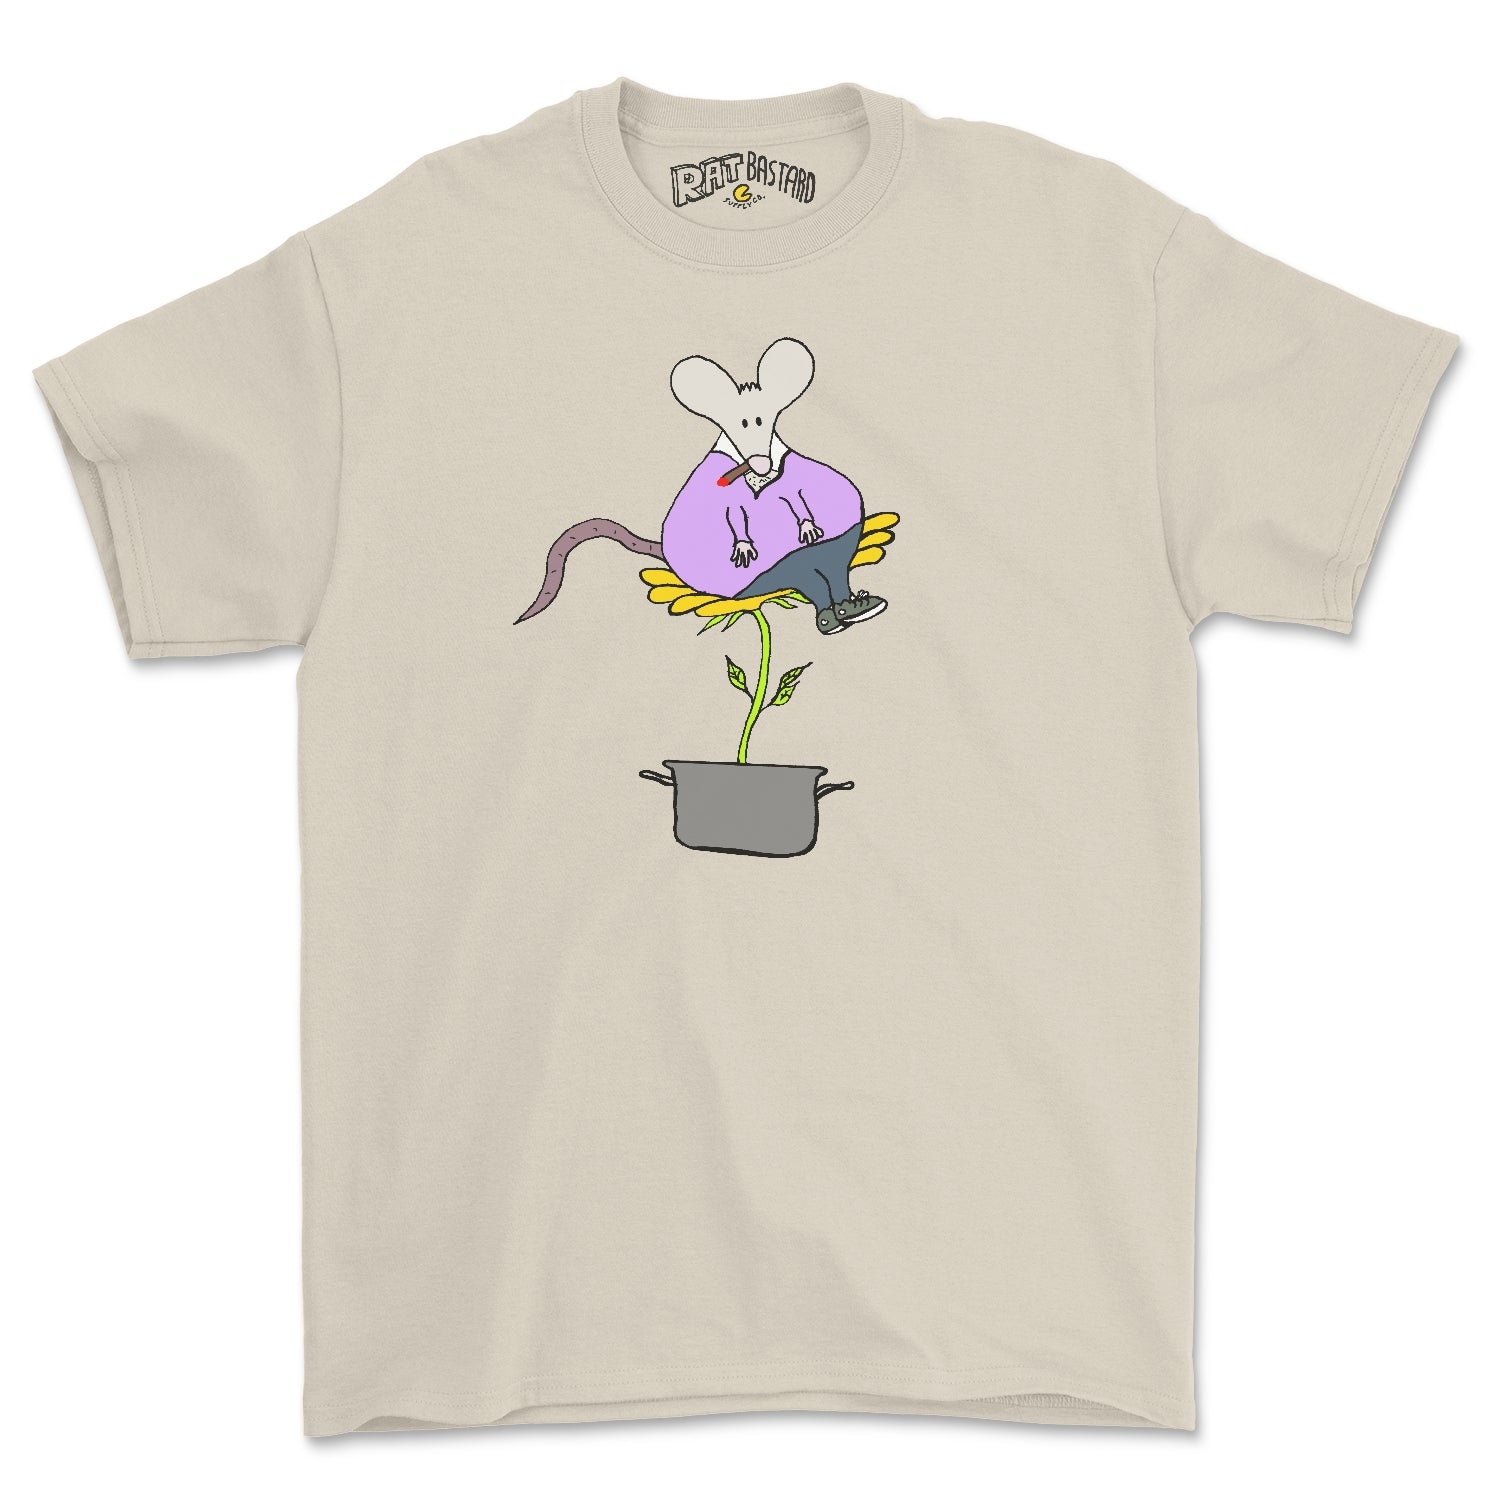 Clemenza Rat Graphic Tee Shirt